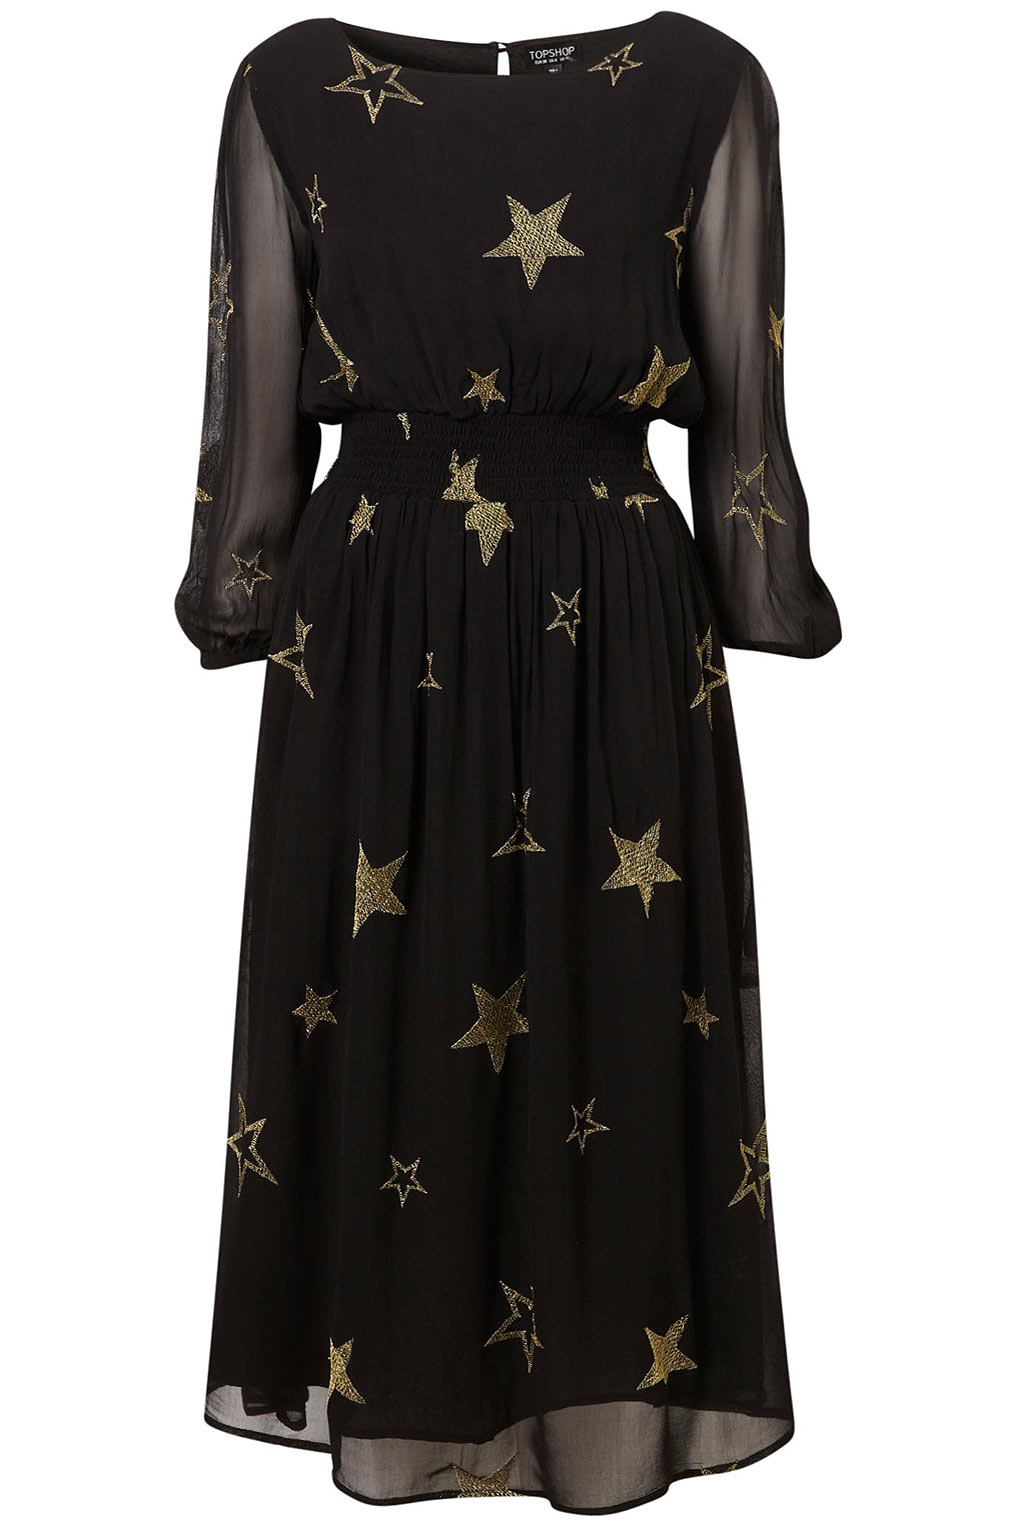 topshop black star dress